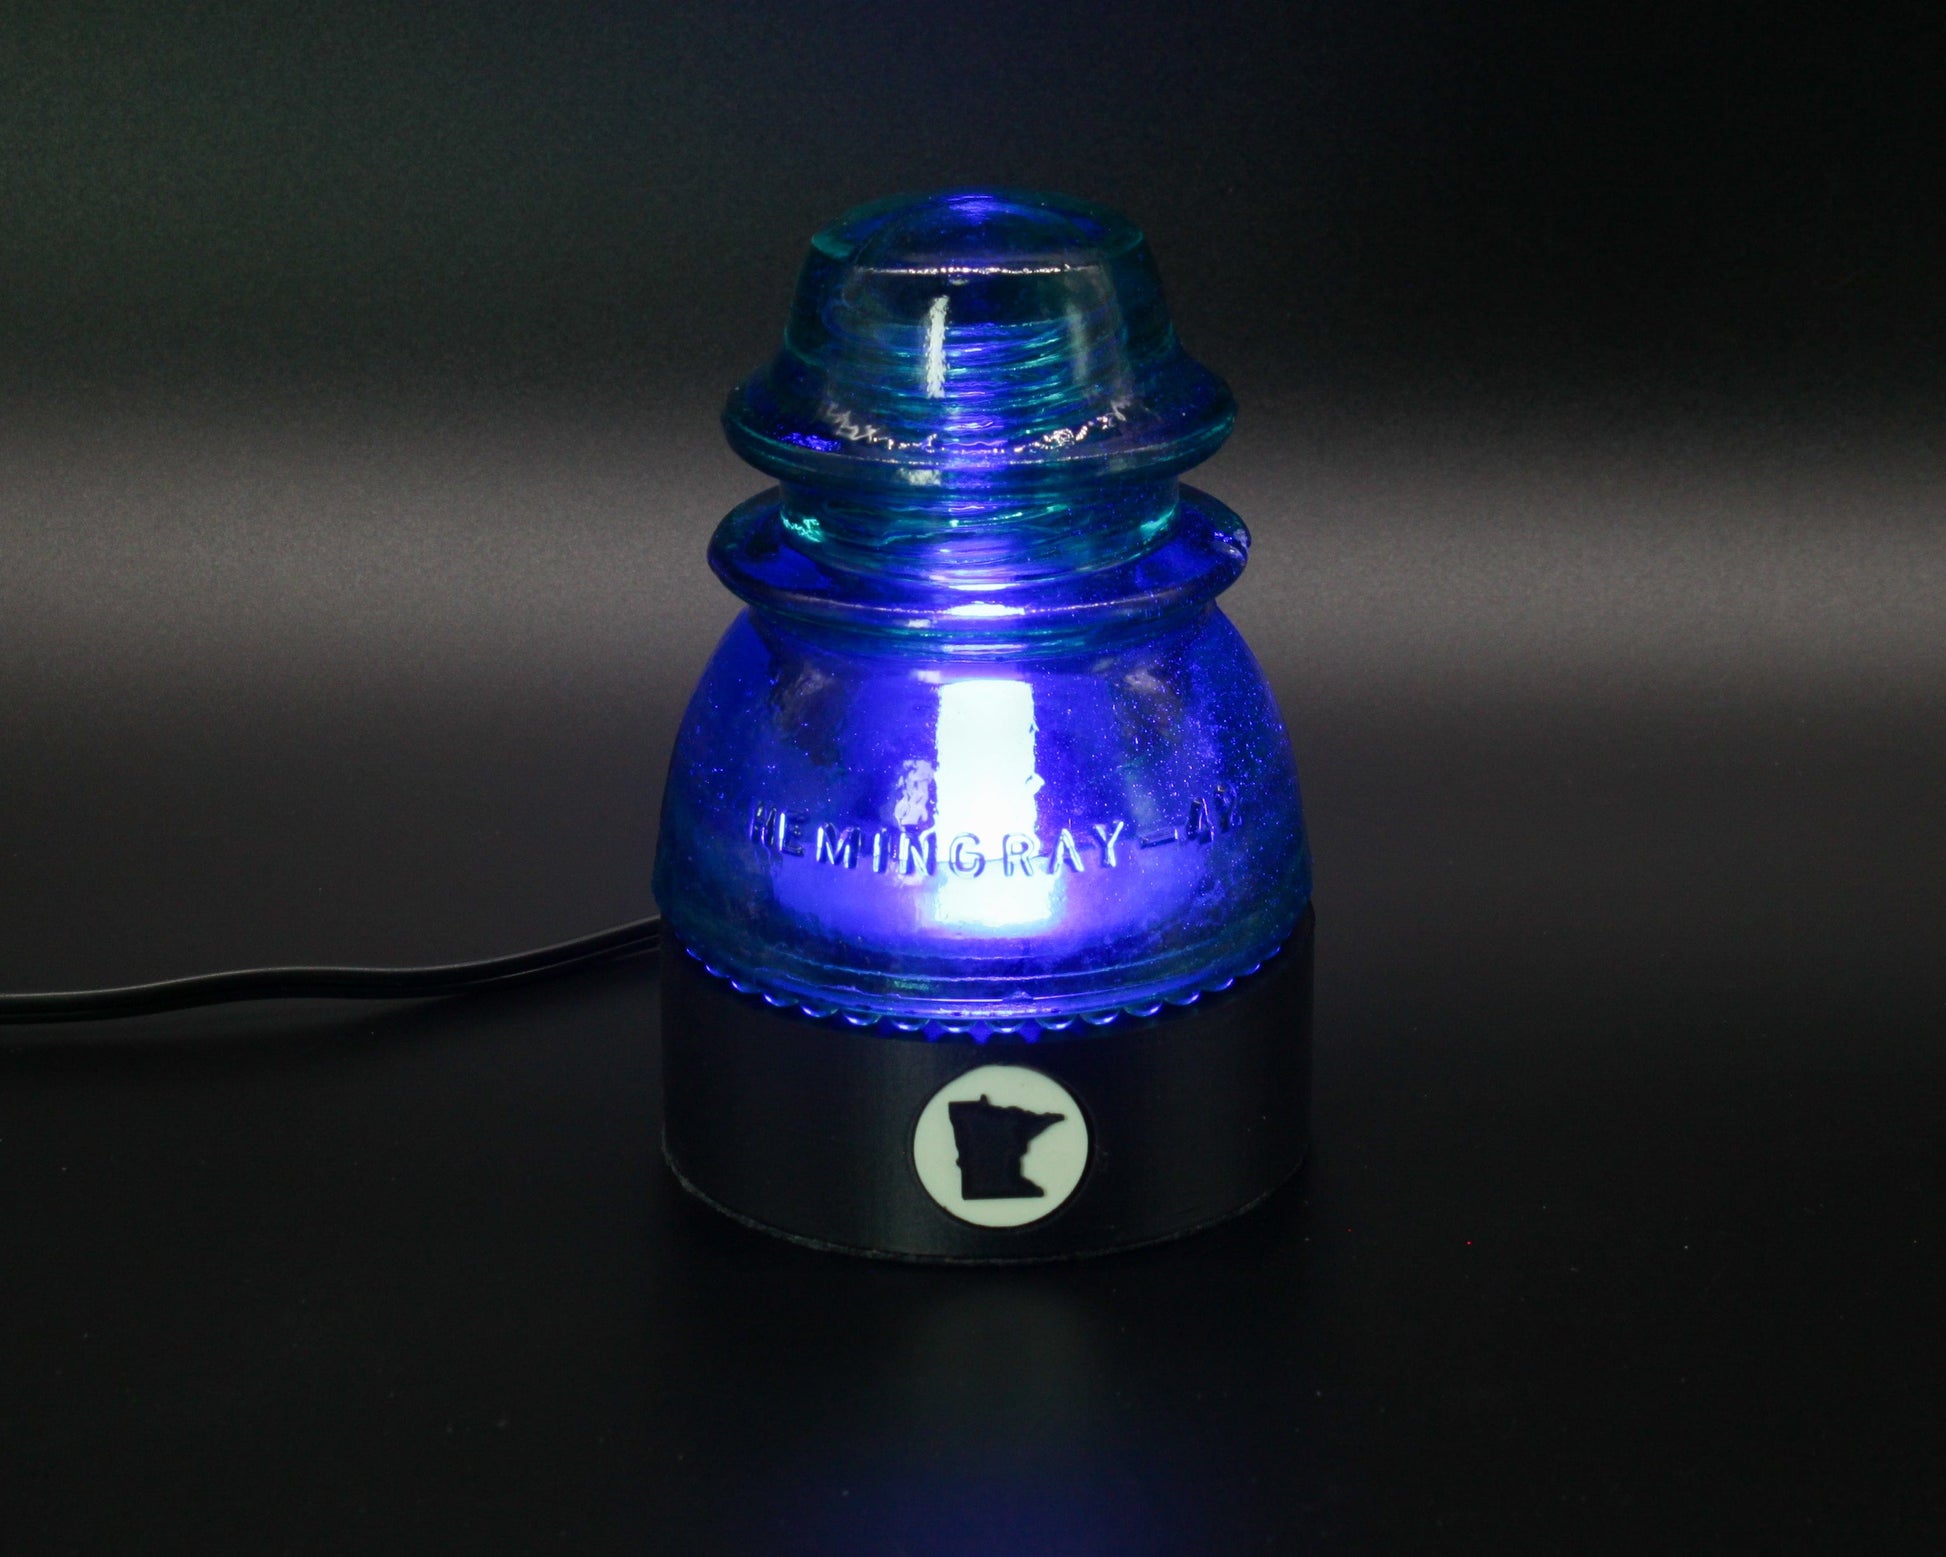 LightAndTimeArt Industrial lamp Lamp Base Kit with icon inserts for "Hemingray-40, -42, -45" Glass Insulators